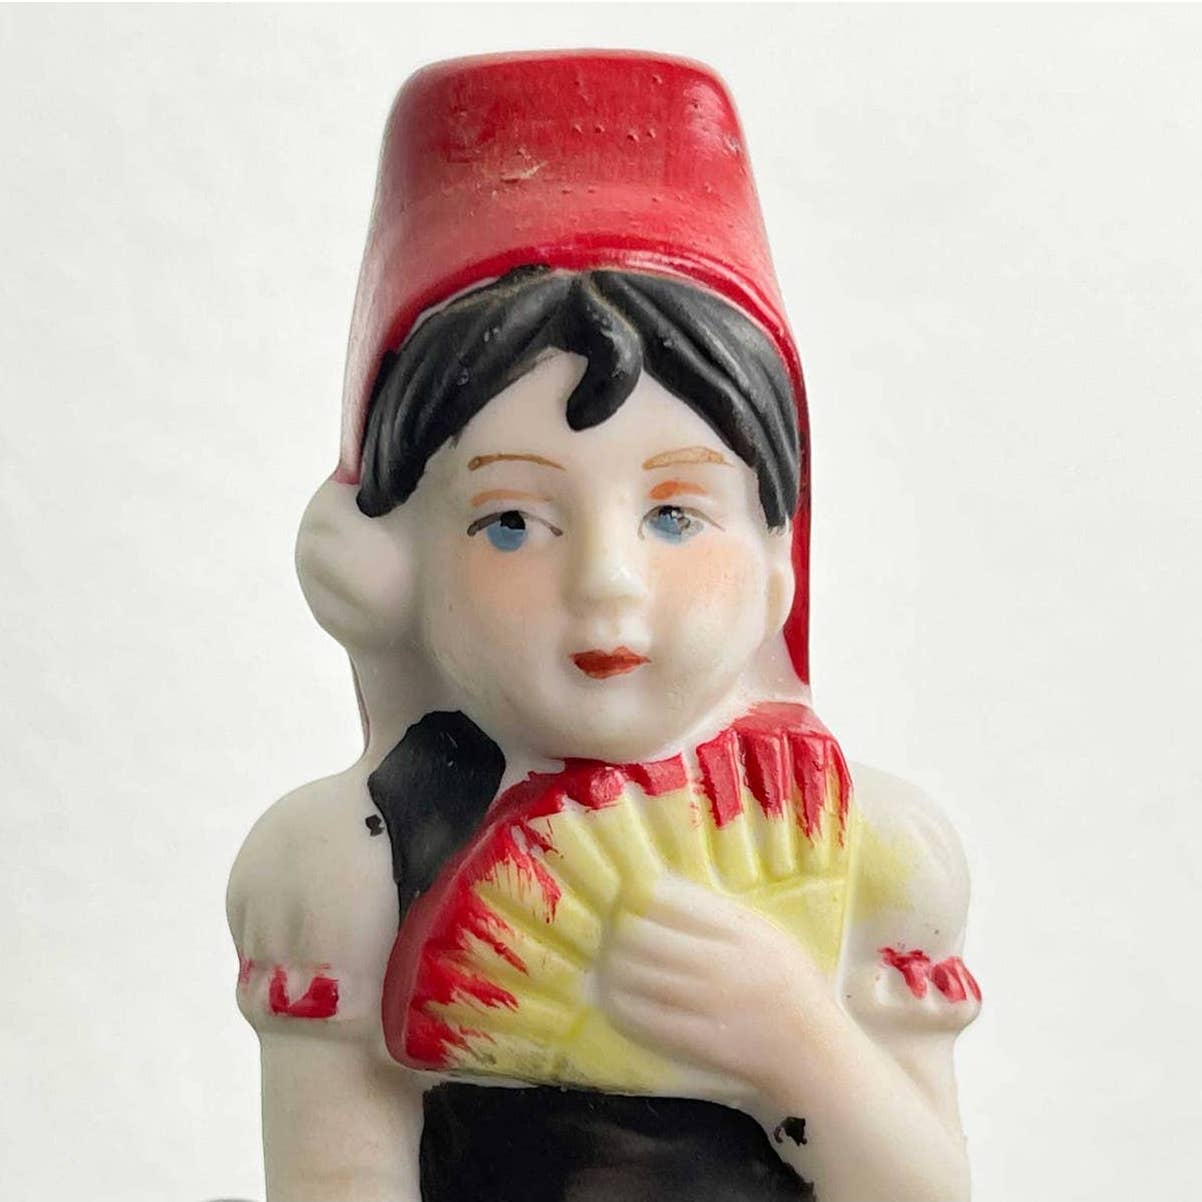 Vintage Spanish Girl Holding Fan Figurine Ceramic Bell